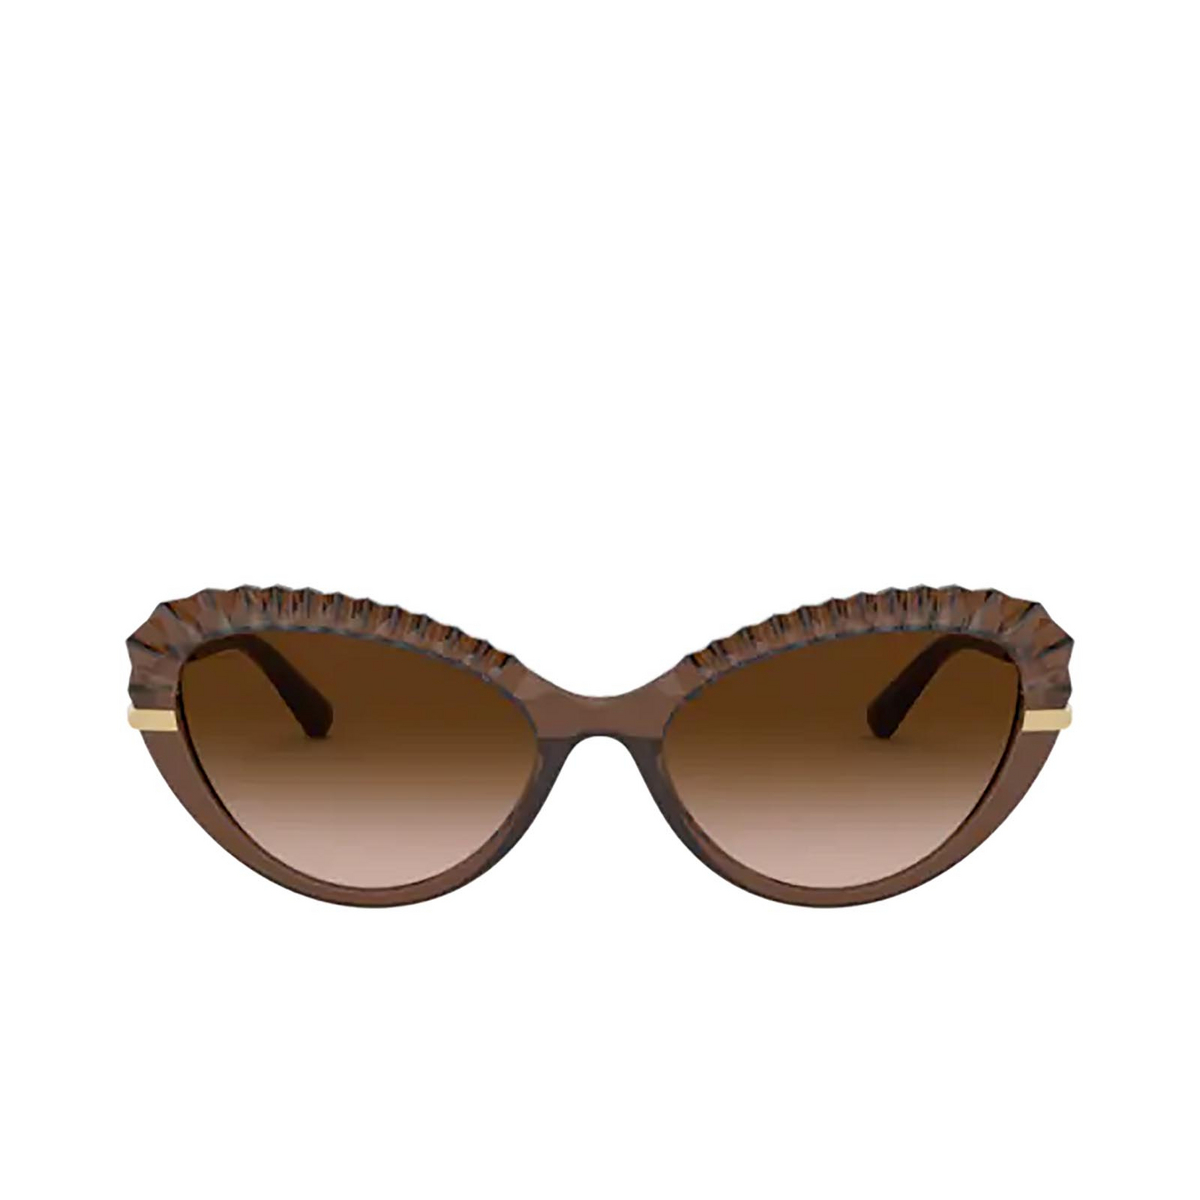 Dolce & Gabbana DG6133 Sunglasses 315913 TRANSPARENT BROWN - front view